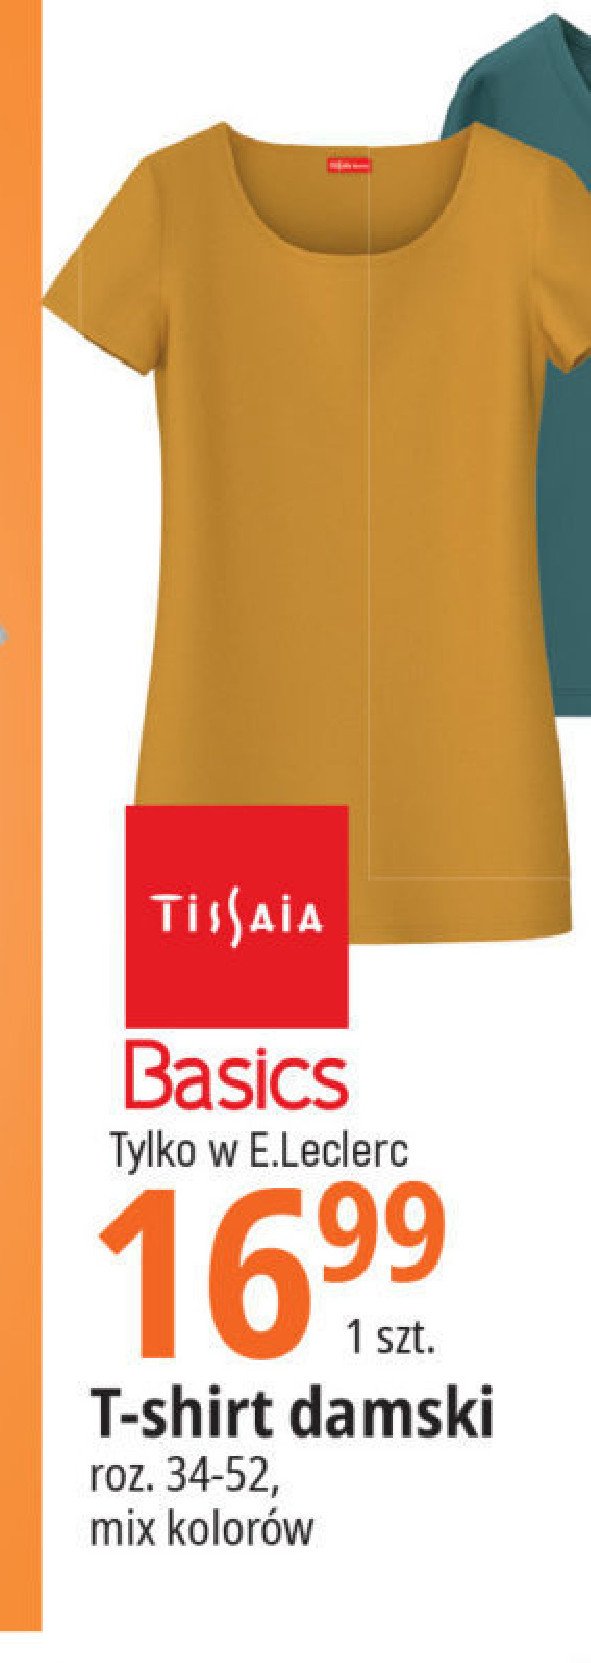 T-shirt damski 34-52 Tissaia promocja